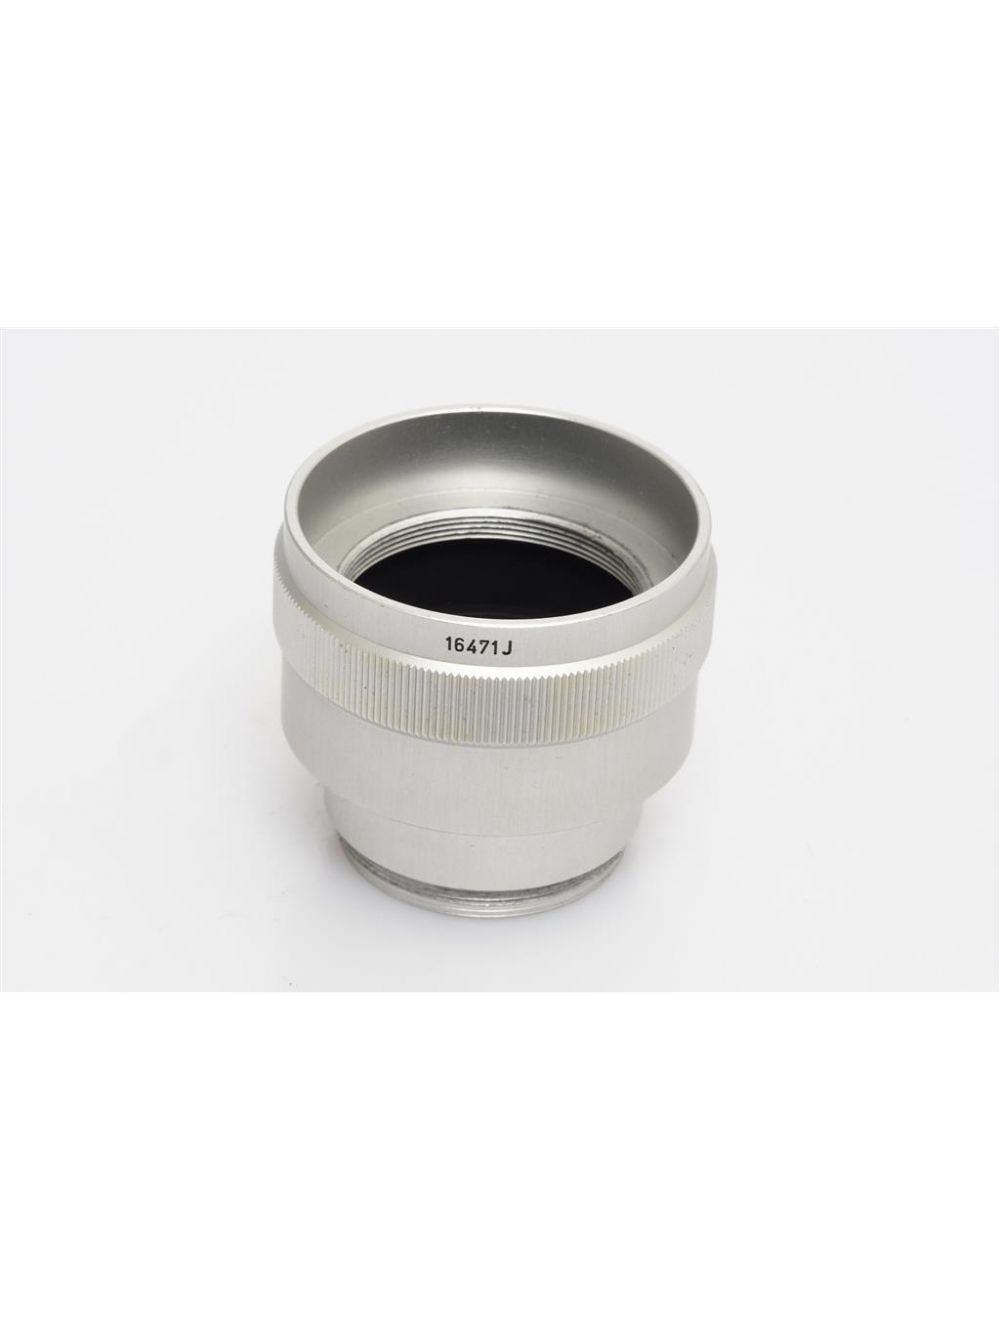 Leitz Leica OSTRO 16471J Extension Ring f 16464 Near Mint 